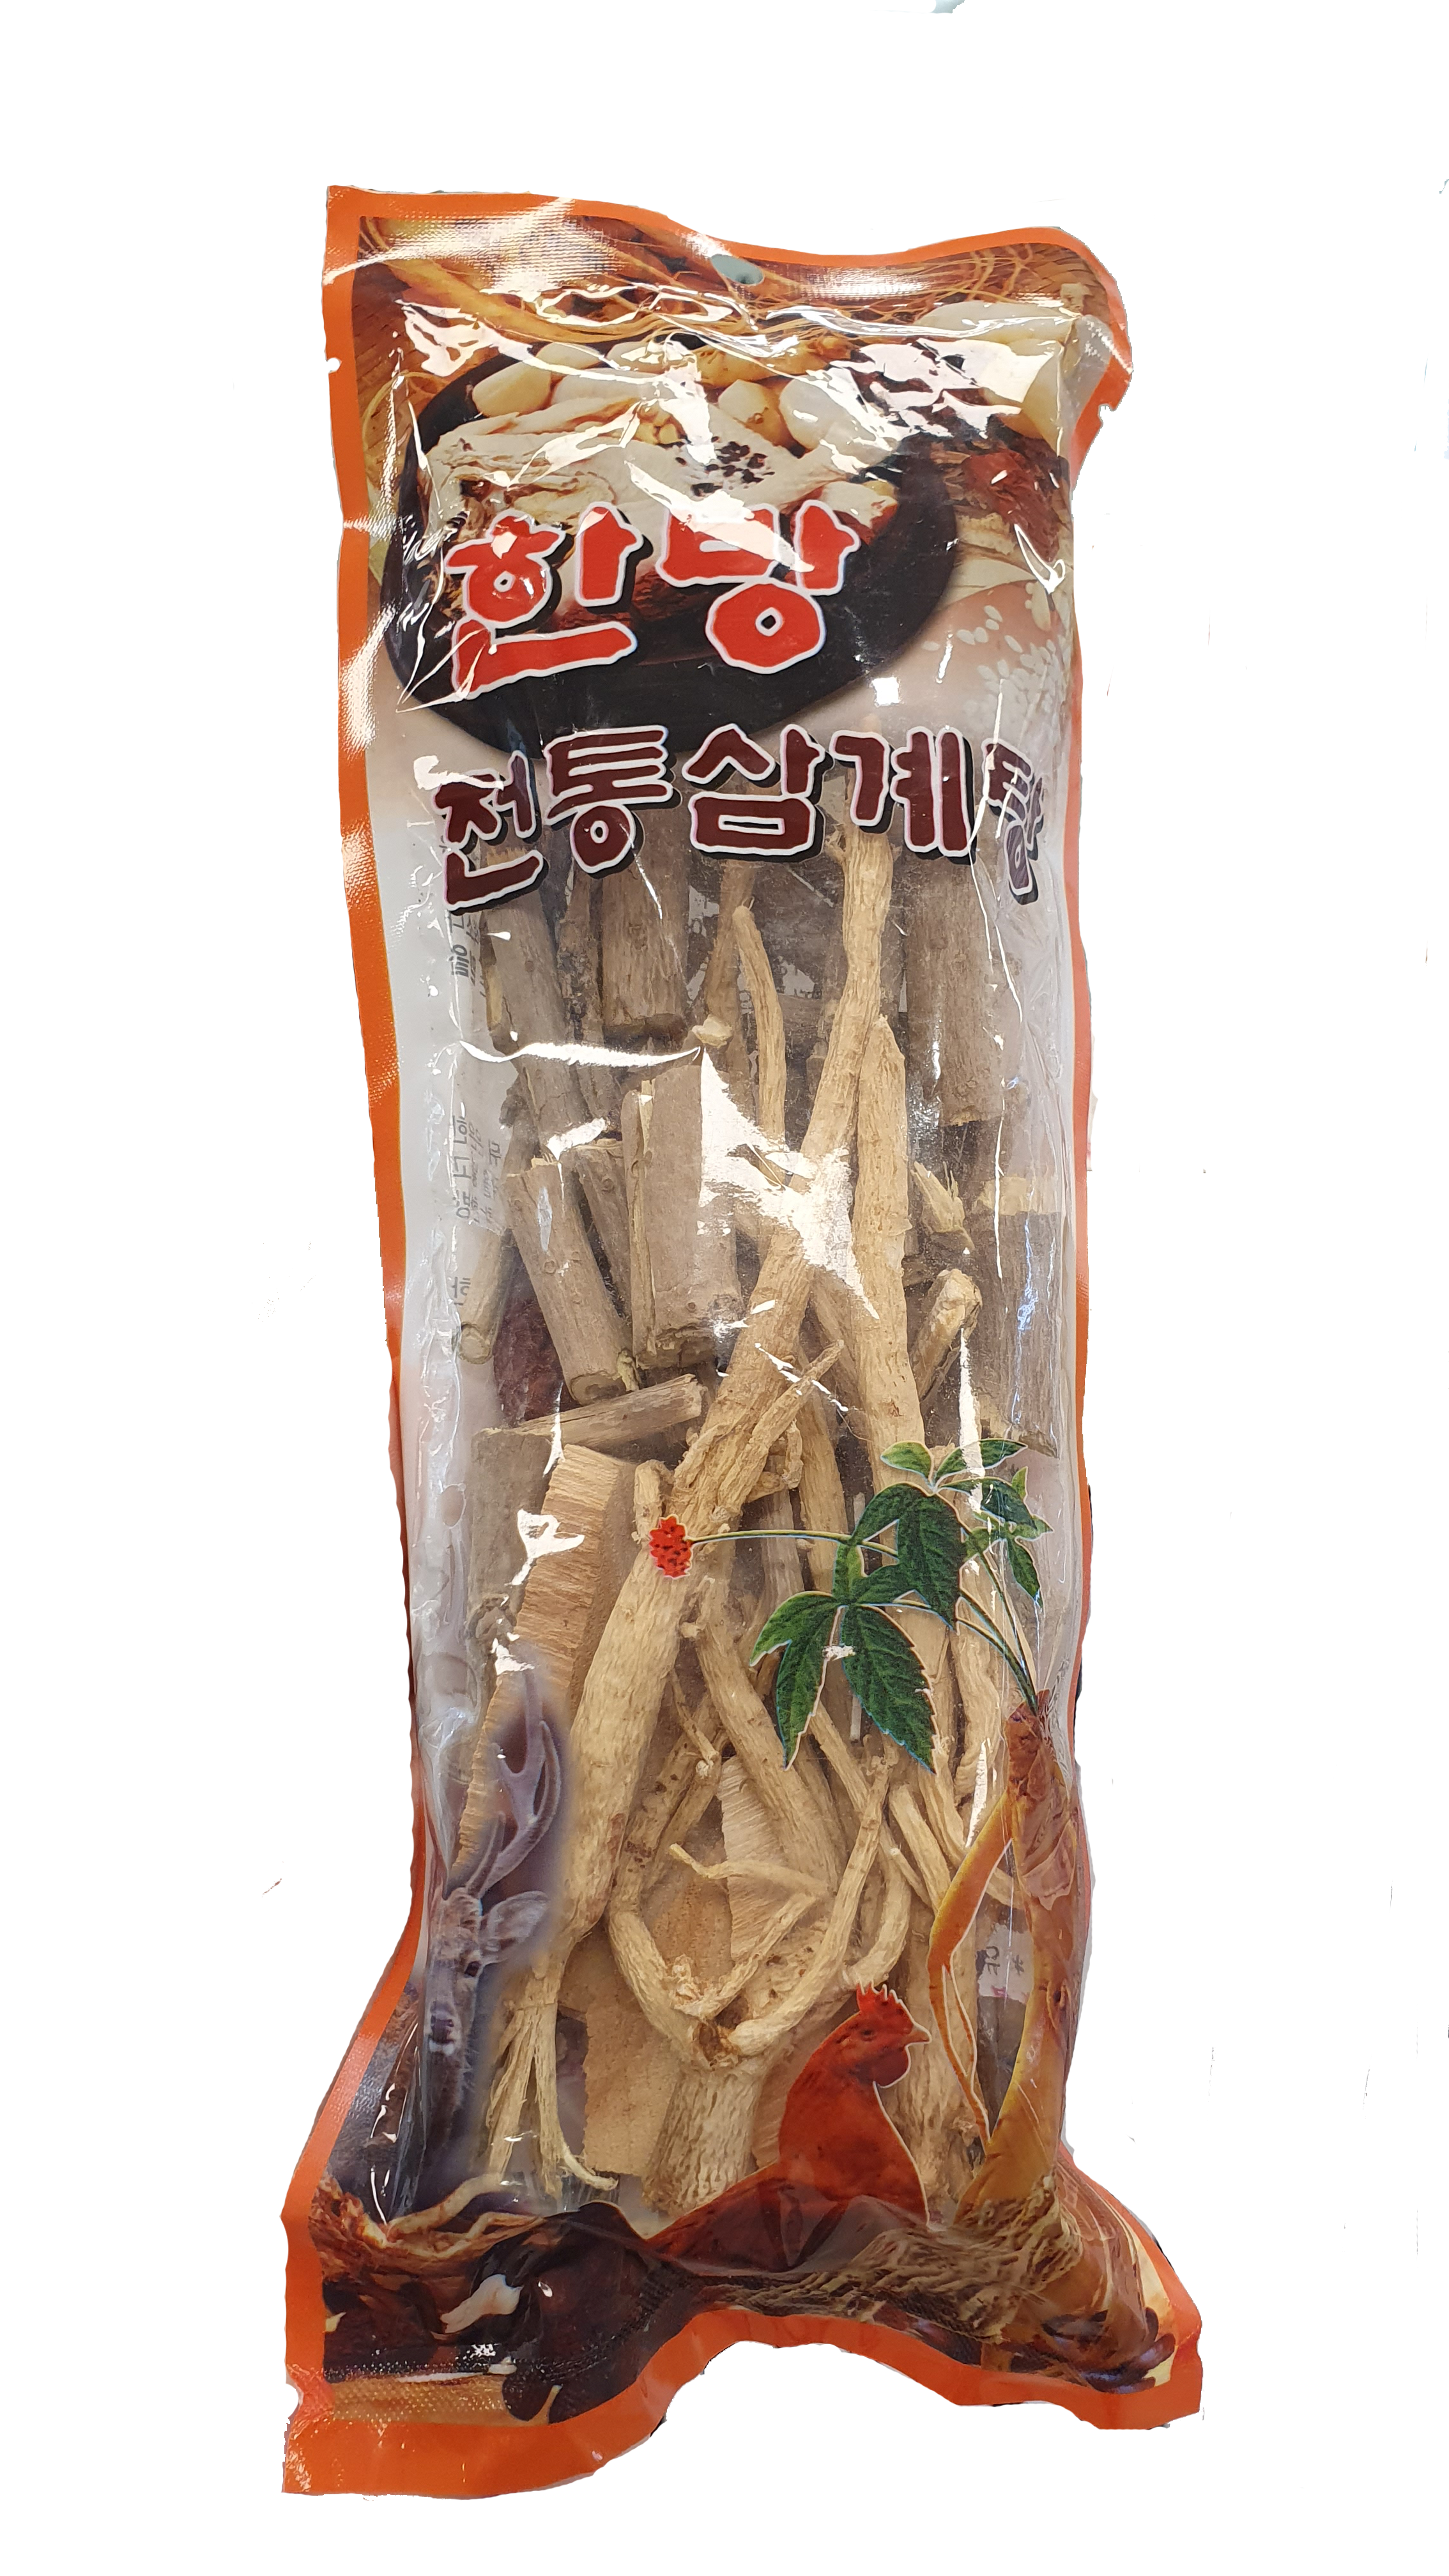 Korean Medicinal Herbs for Samgyetang (Ginseng Chicken Soup Stew)